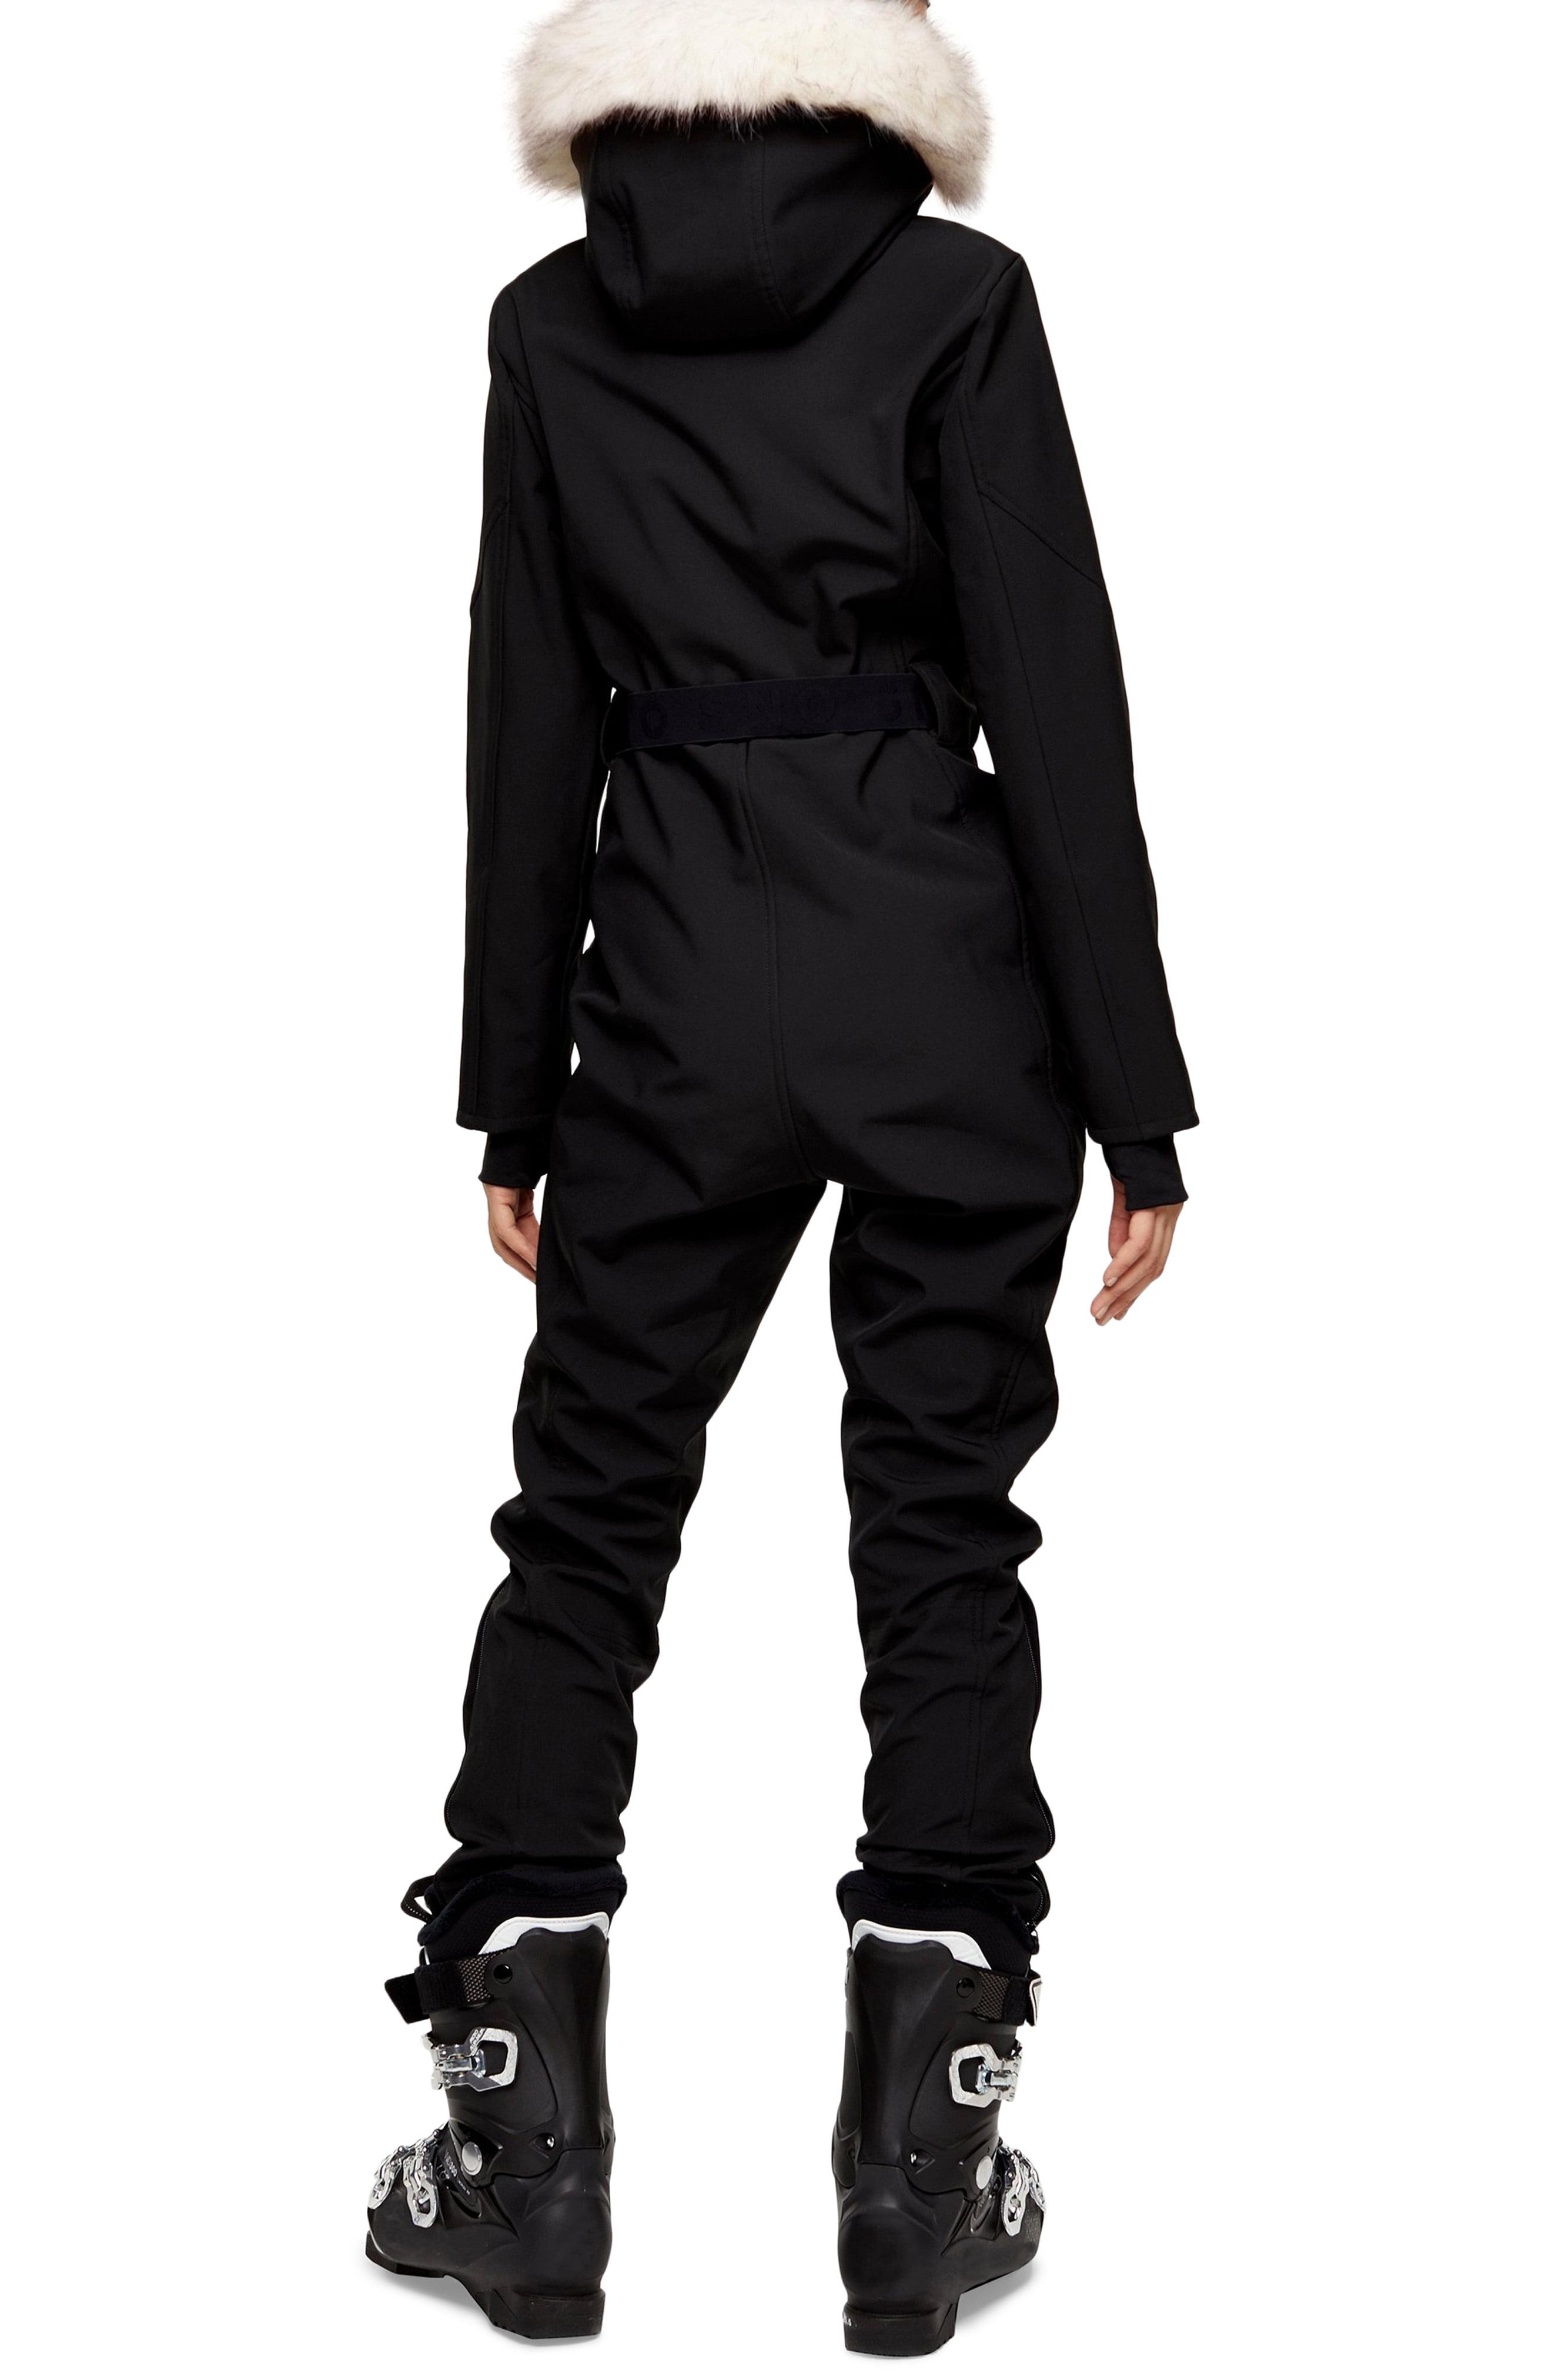 TOPSHOP black Hooded Ski Snow Suit By Sno